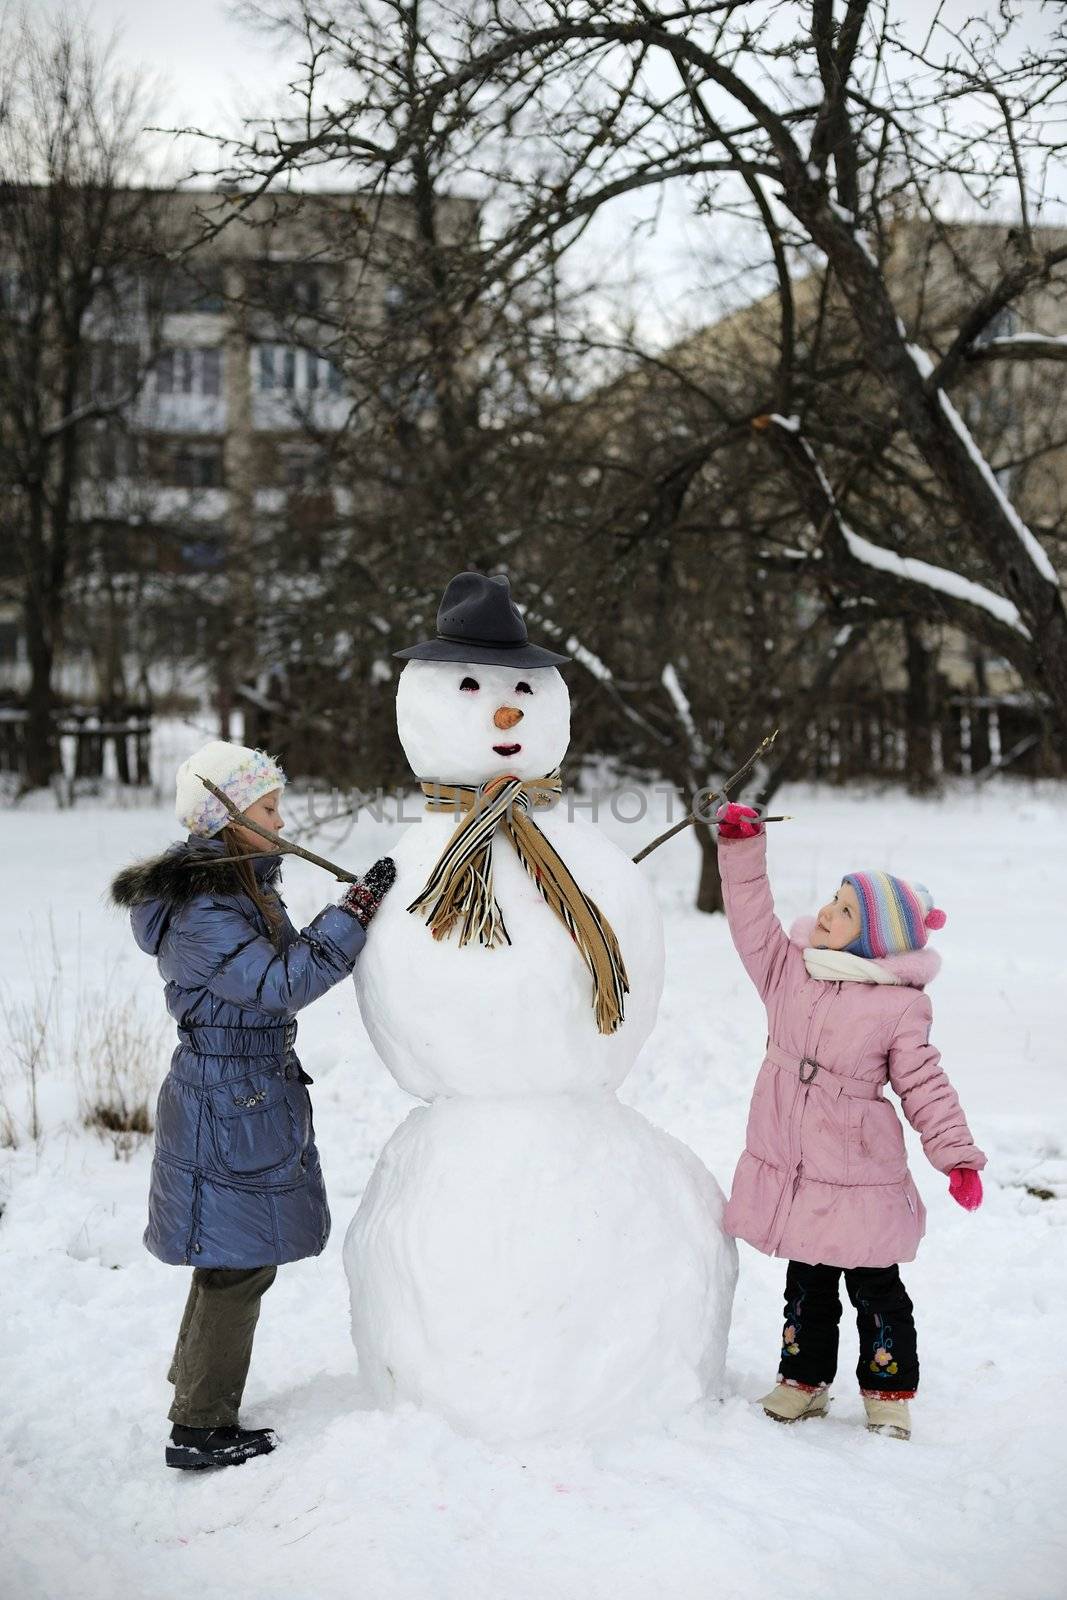 Big snowman by velkol